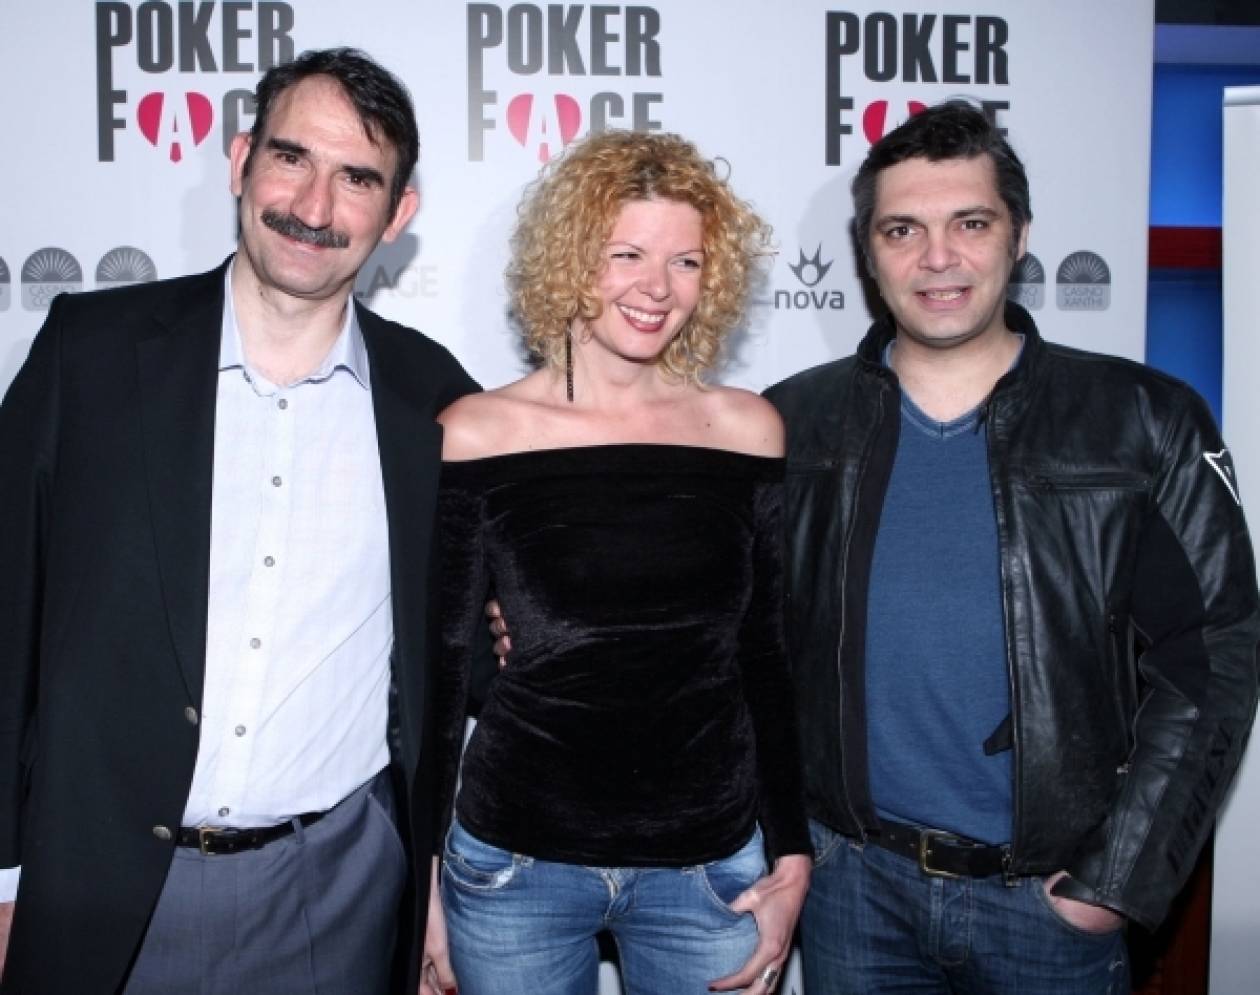 Oι δημιουργοί του "Poker Face" ζητάνε συγγνώμη ο ένας απ' τον άλλο